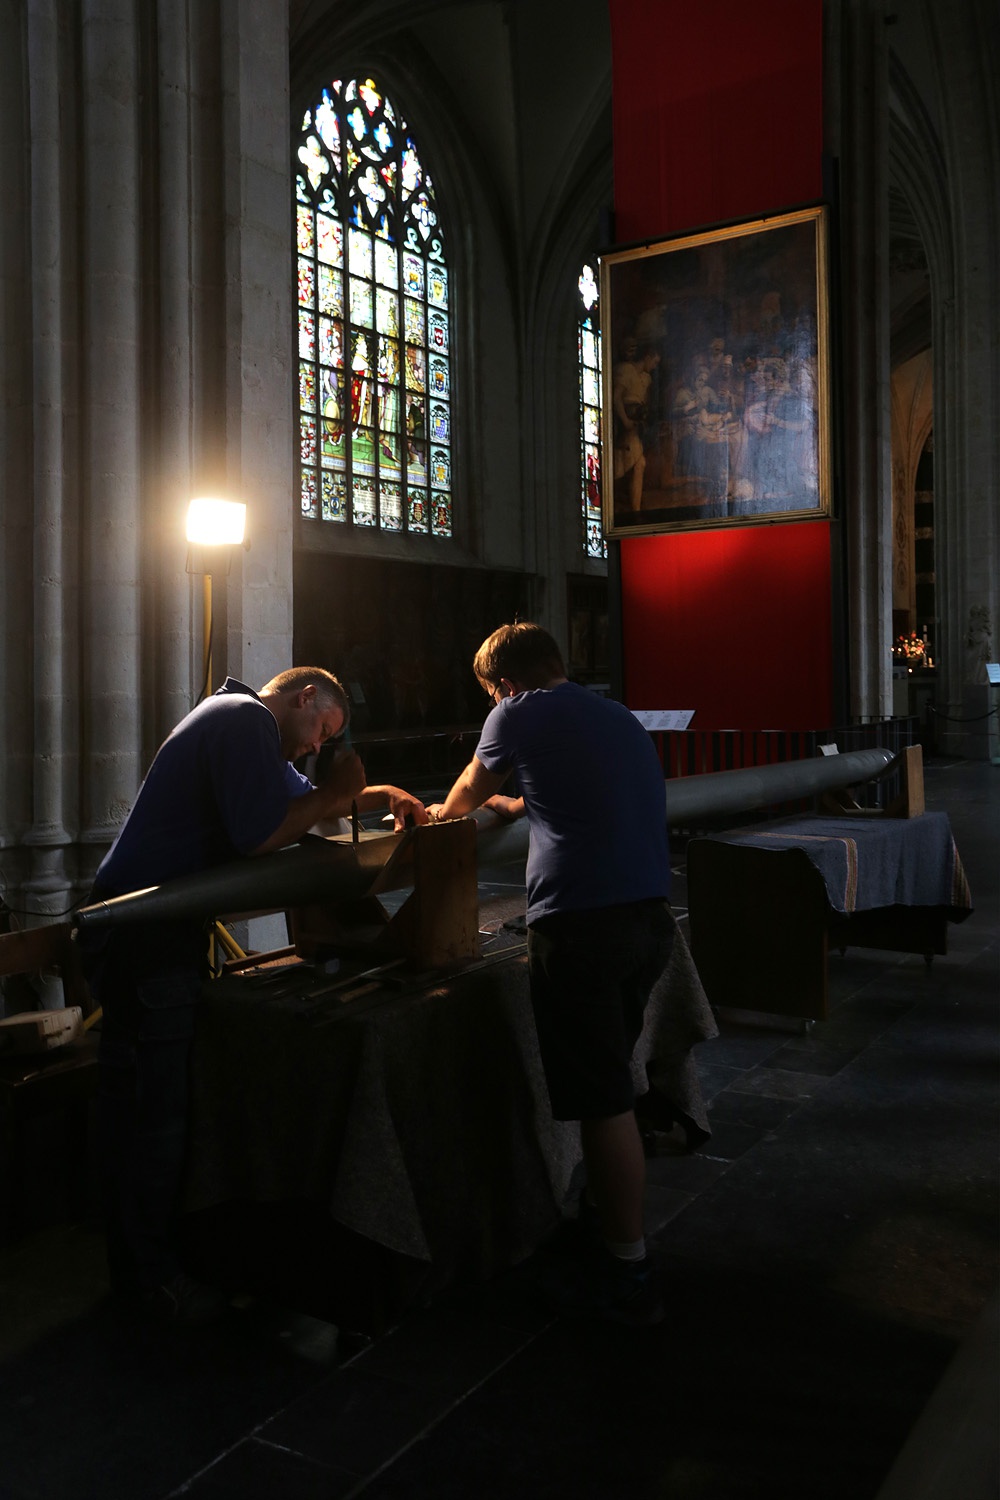 bill-hocker-organ-pipe-cathedral-of-our-lady-antwerp-belgium-2016